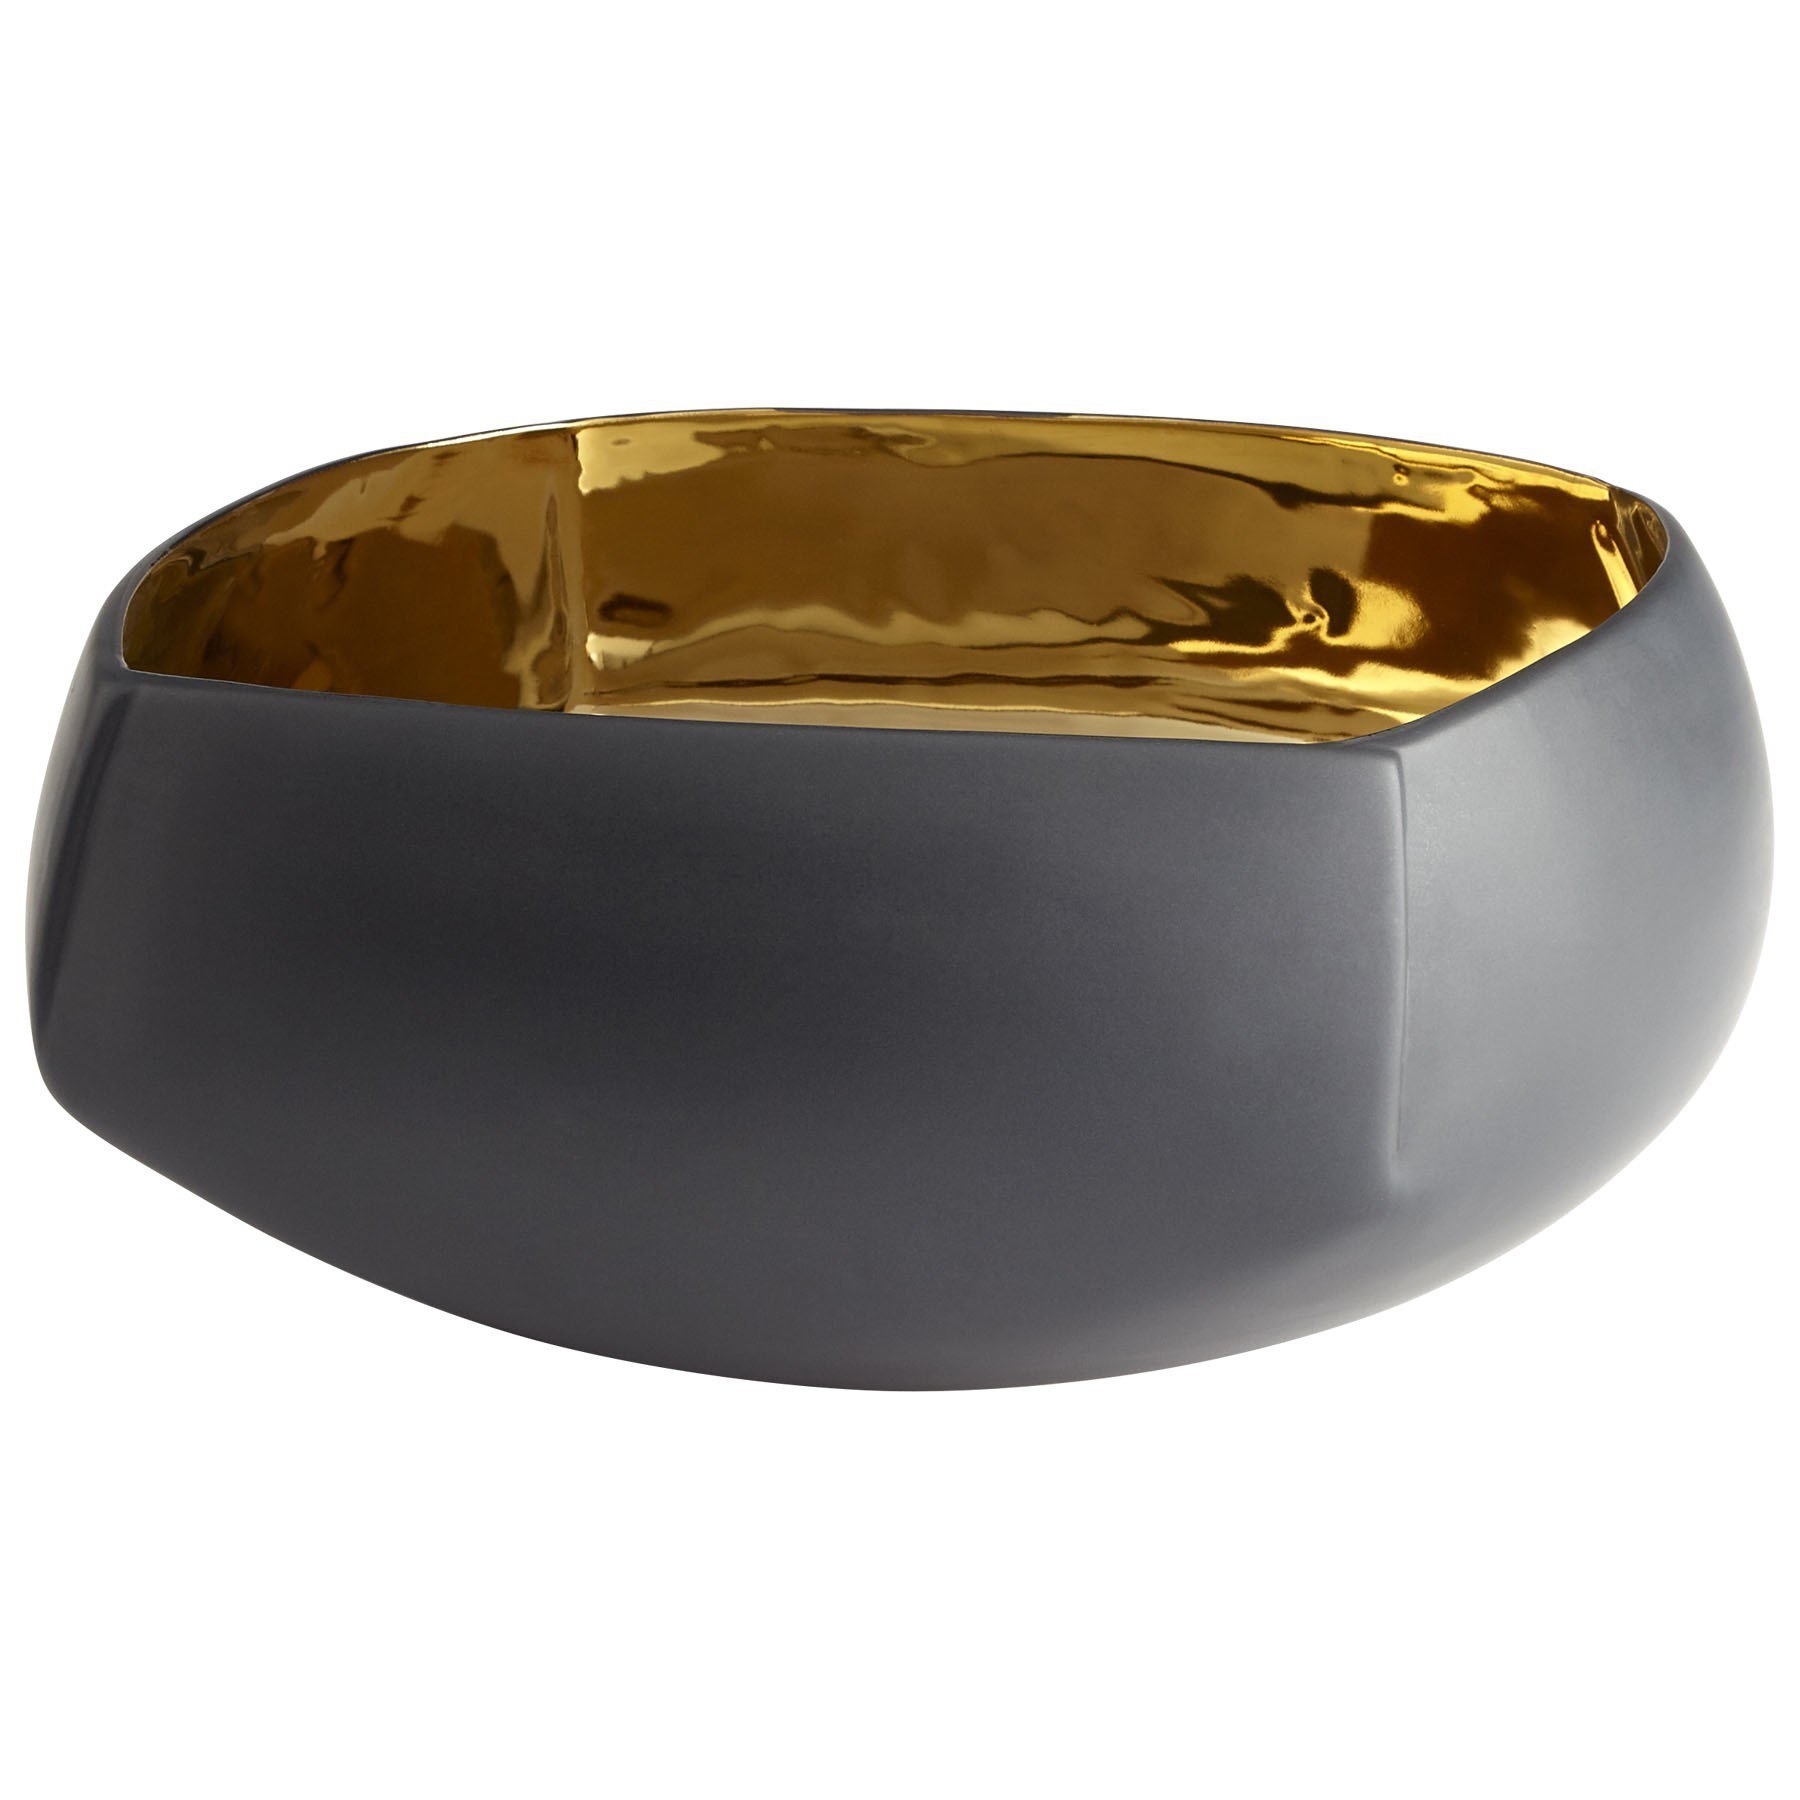 Eda Bowl, Black and Gold - Medium - Image 0